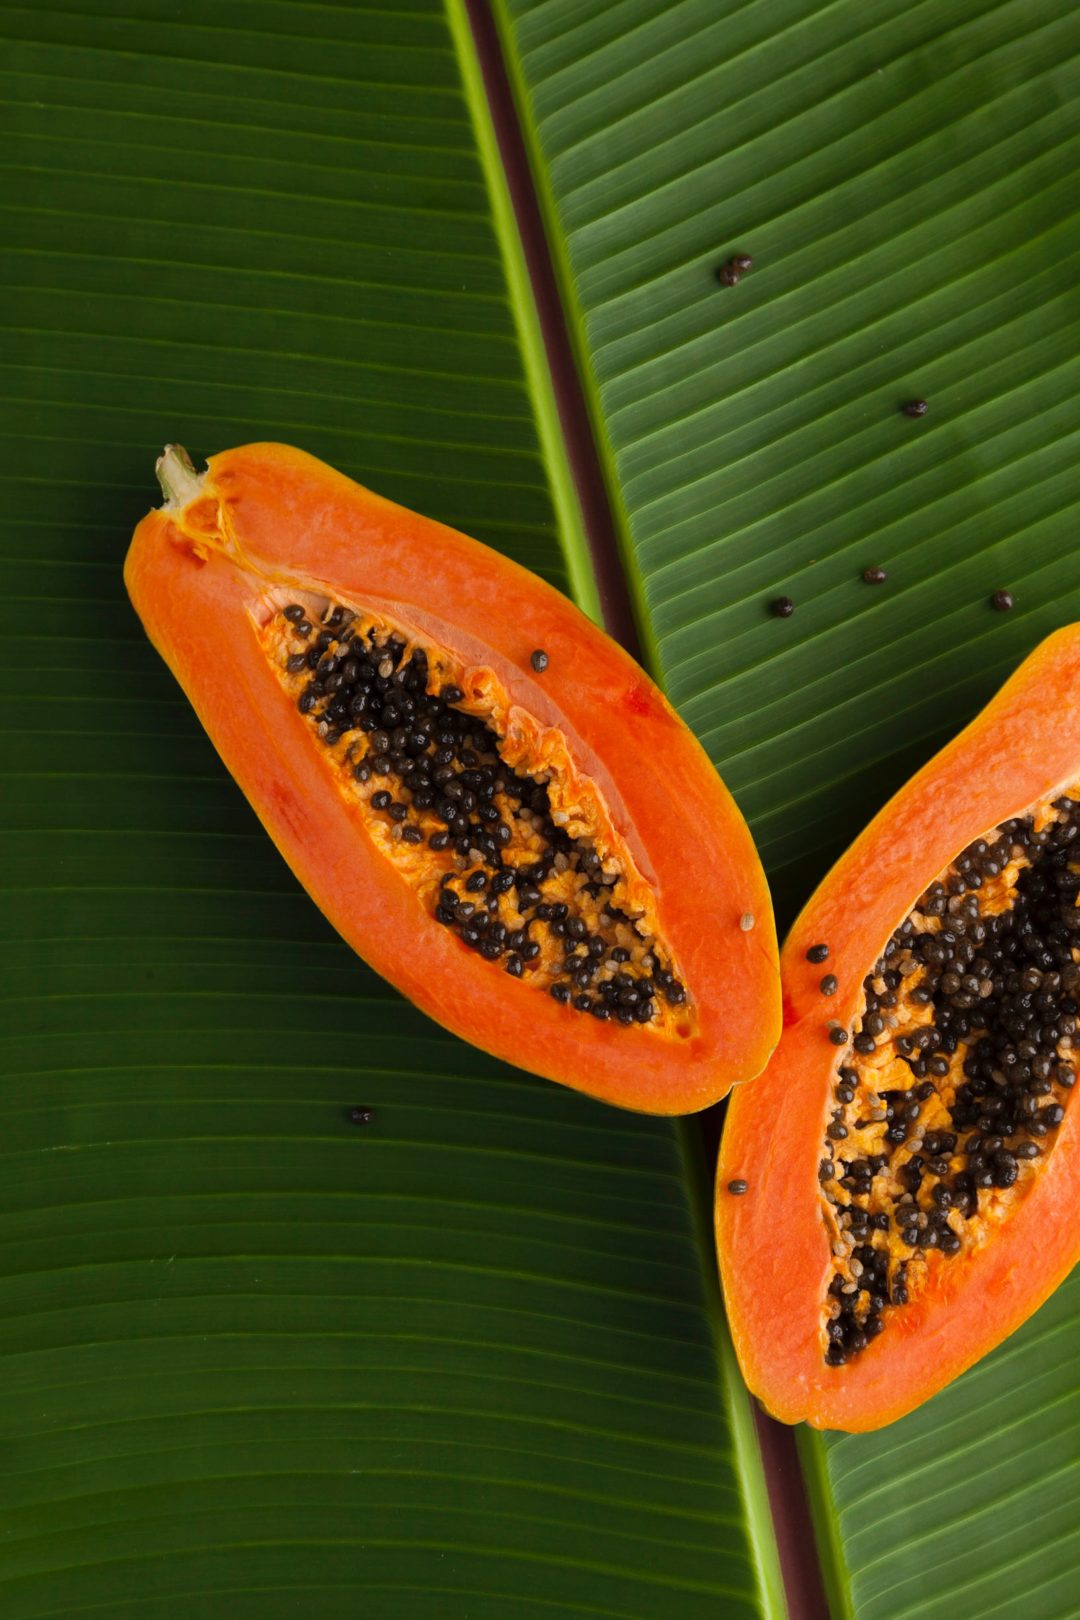 Interior of a ripe papaya with seeds.